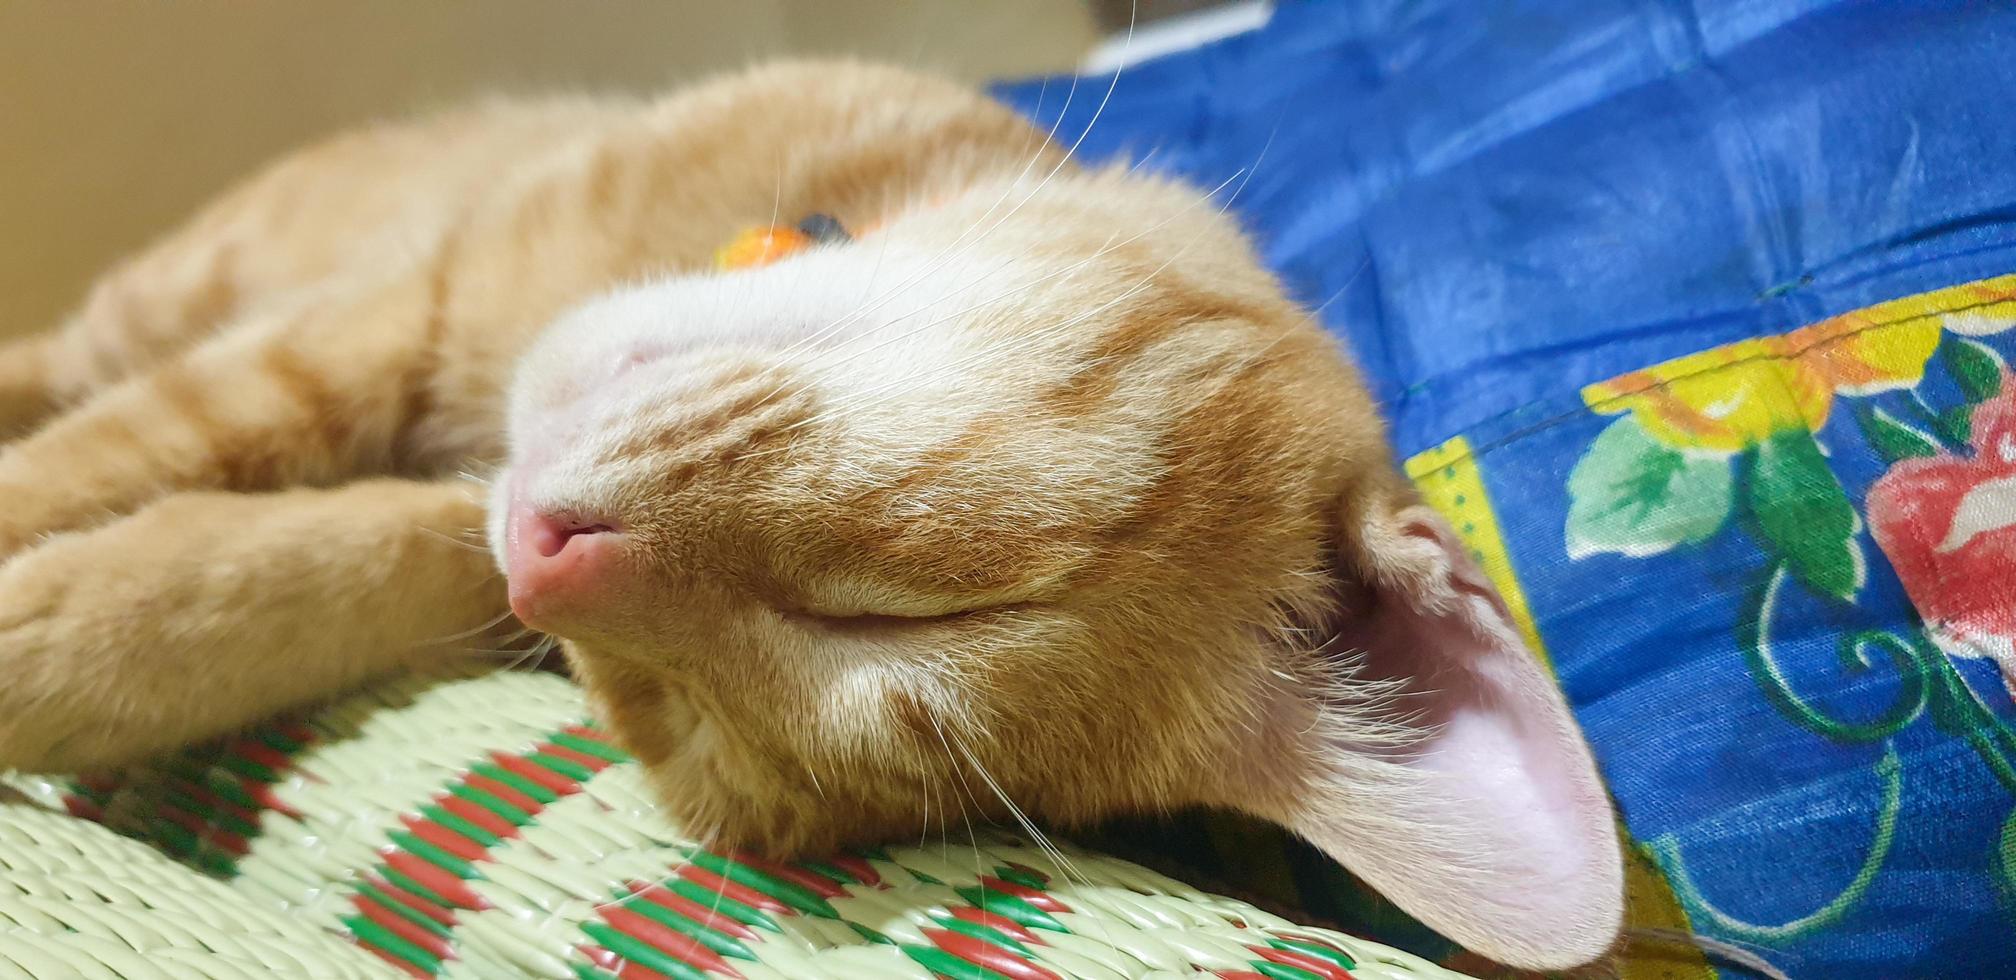 Cute orange kitten fall in sleep photo